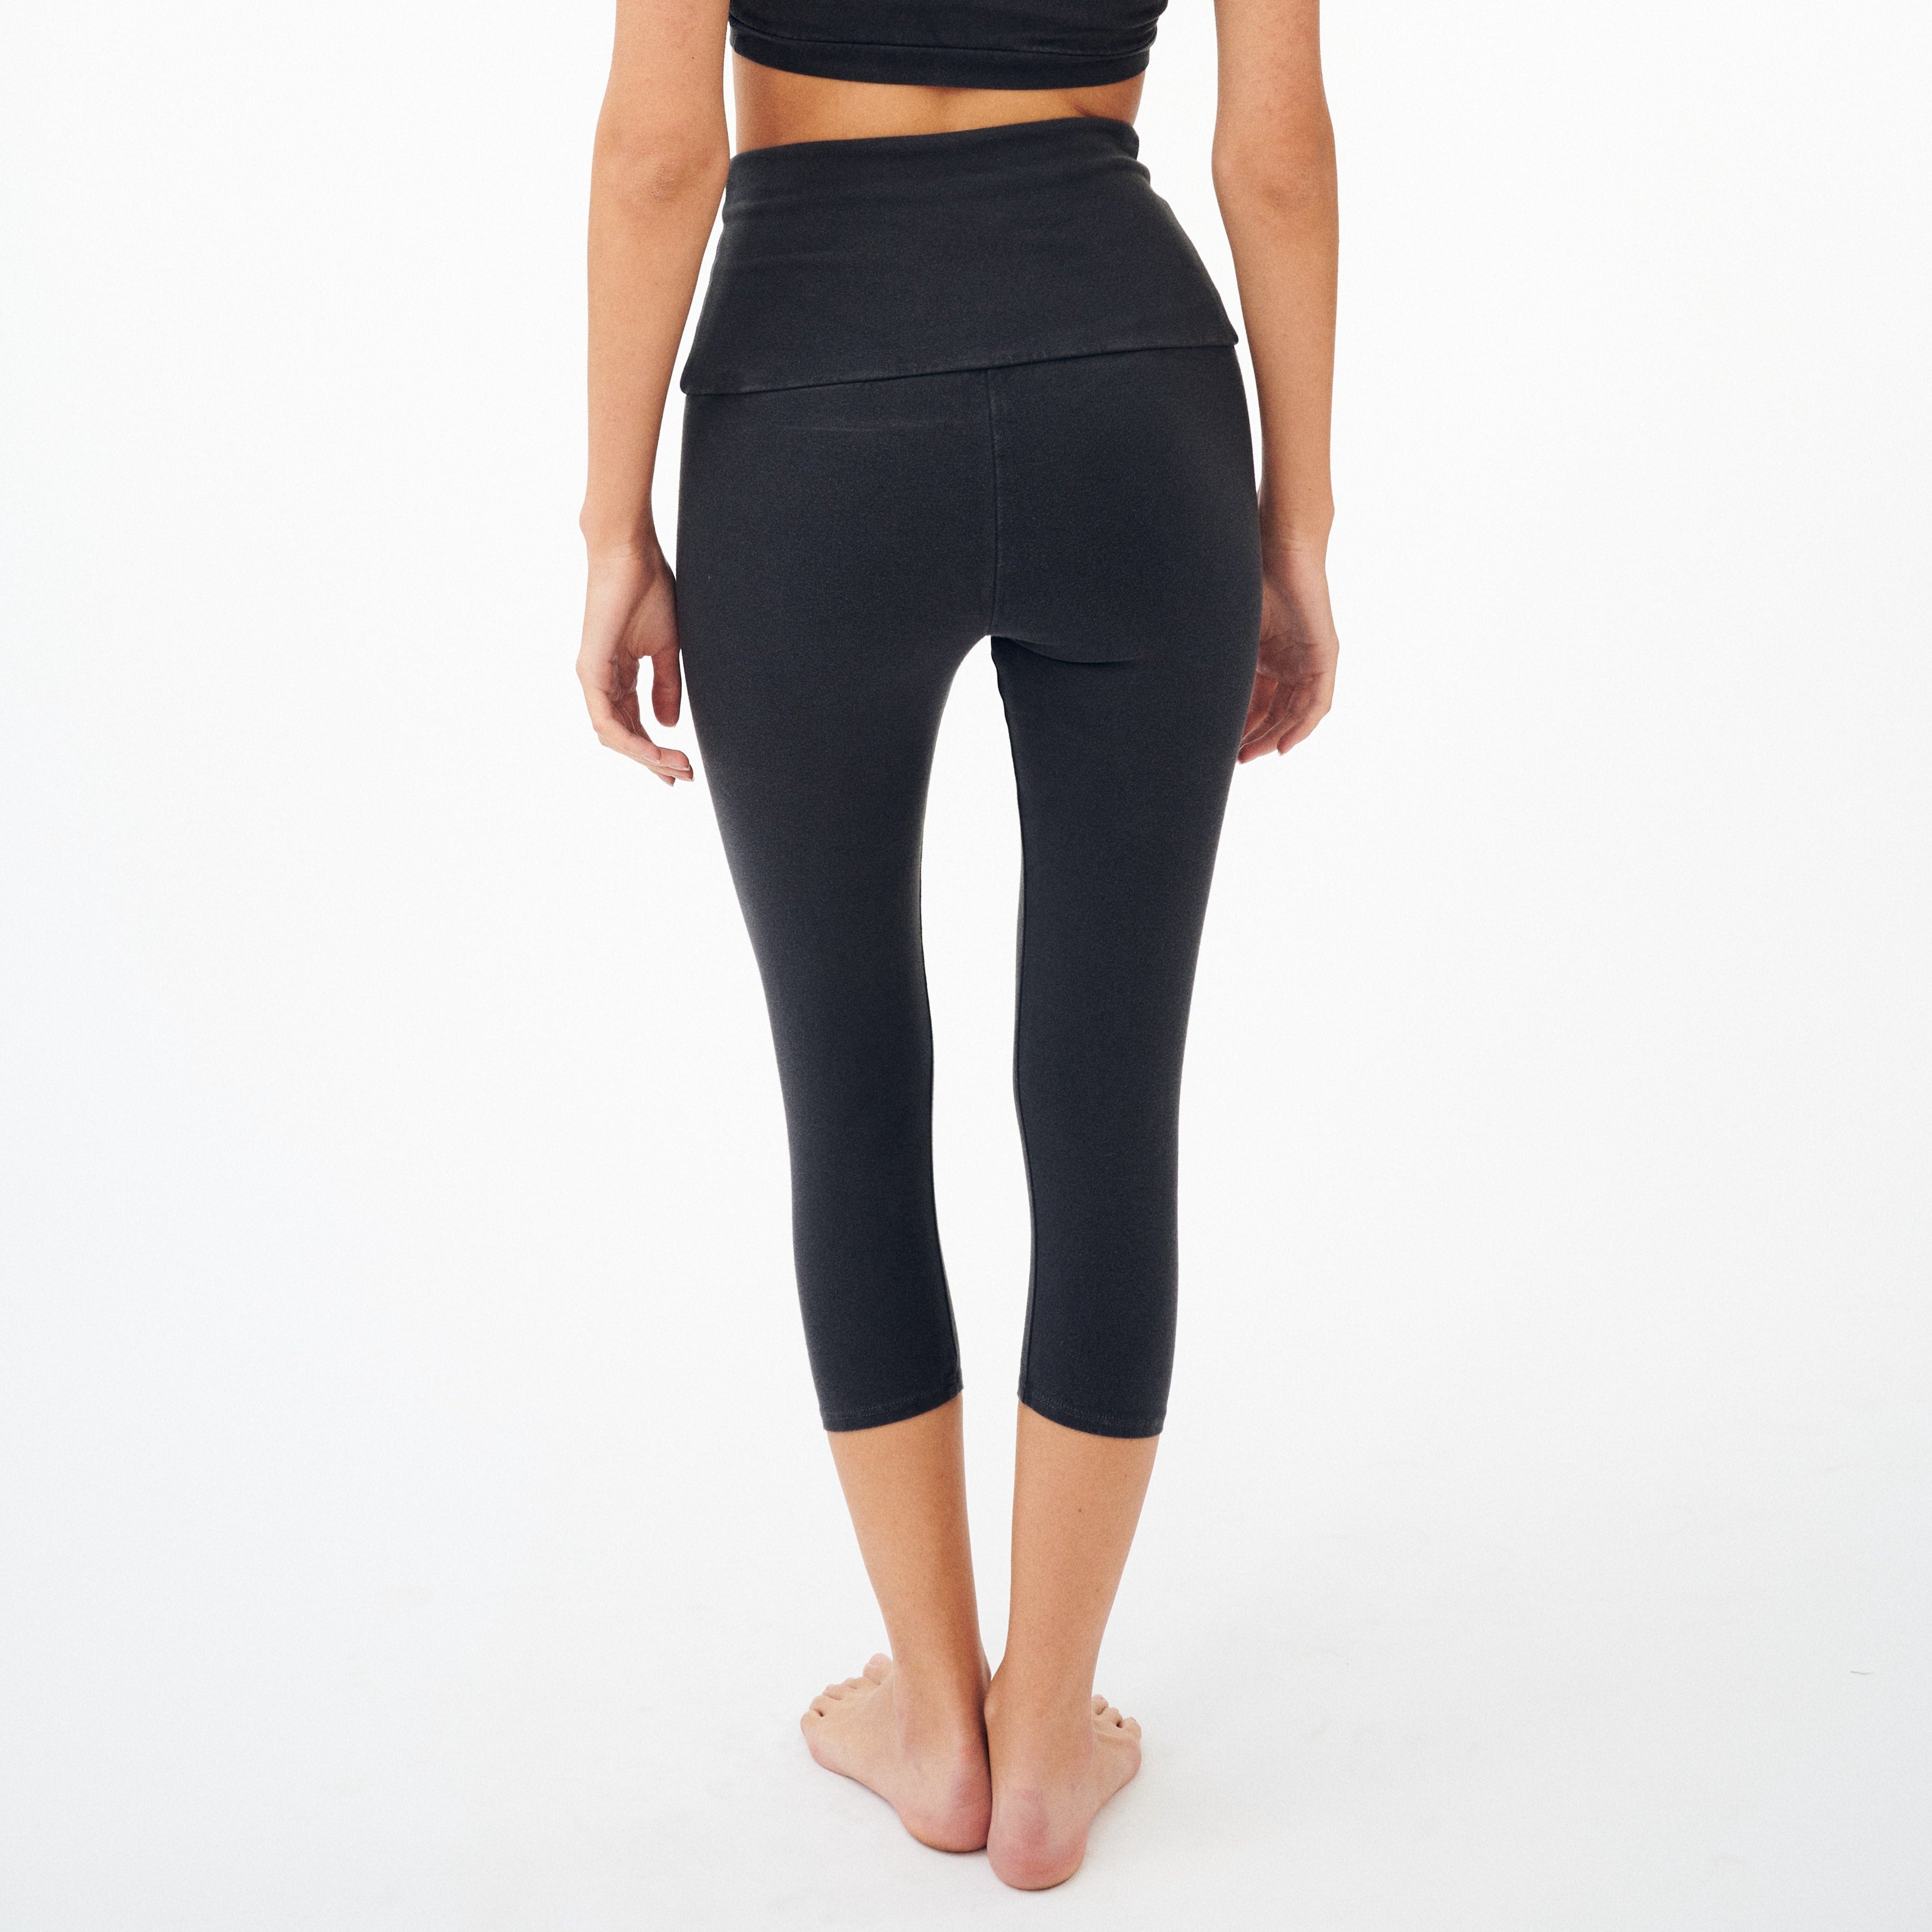 Lululemon black leggings capris size 10 stretch - $37 - From Adriana